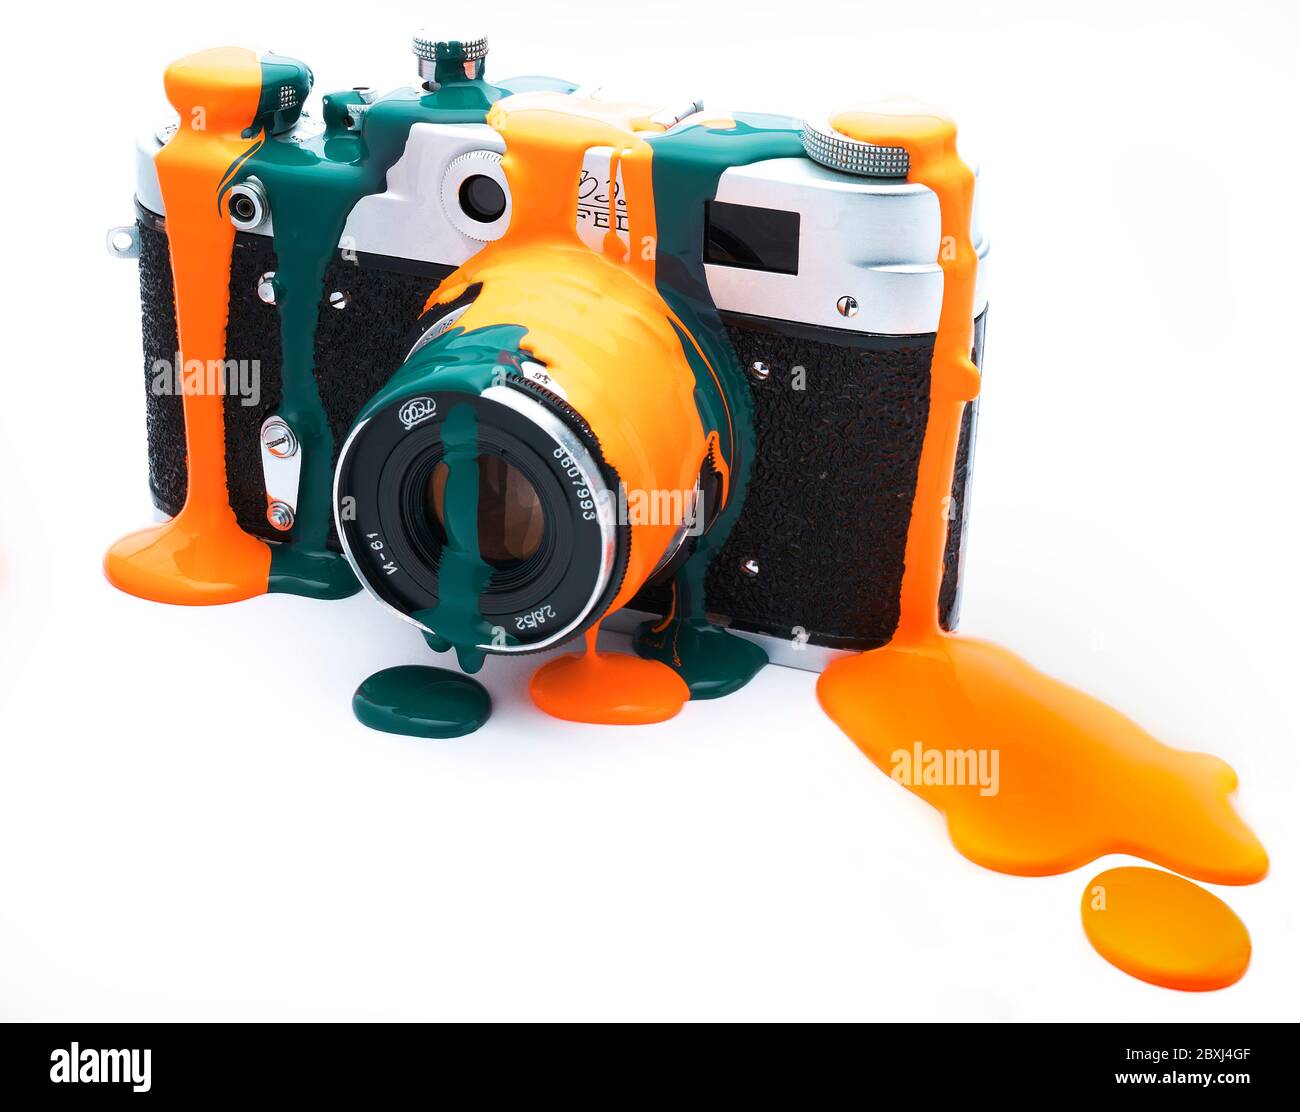 Fotocamera rangefinder russa d'epoca che gocciola a colori, arancione e teal. Foto Stock